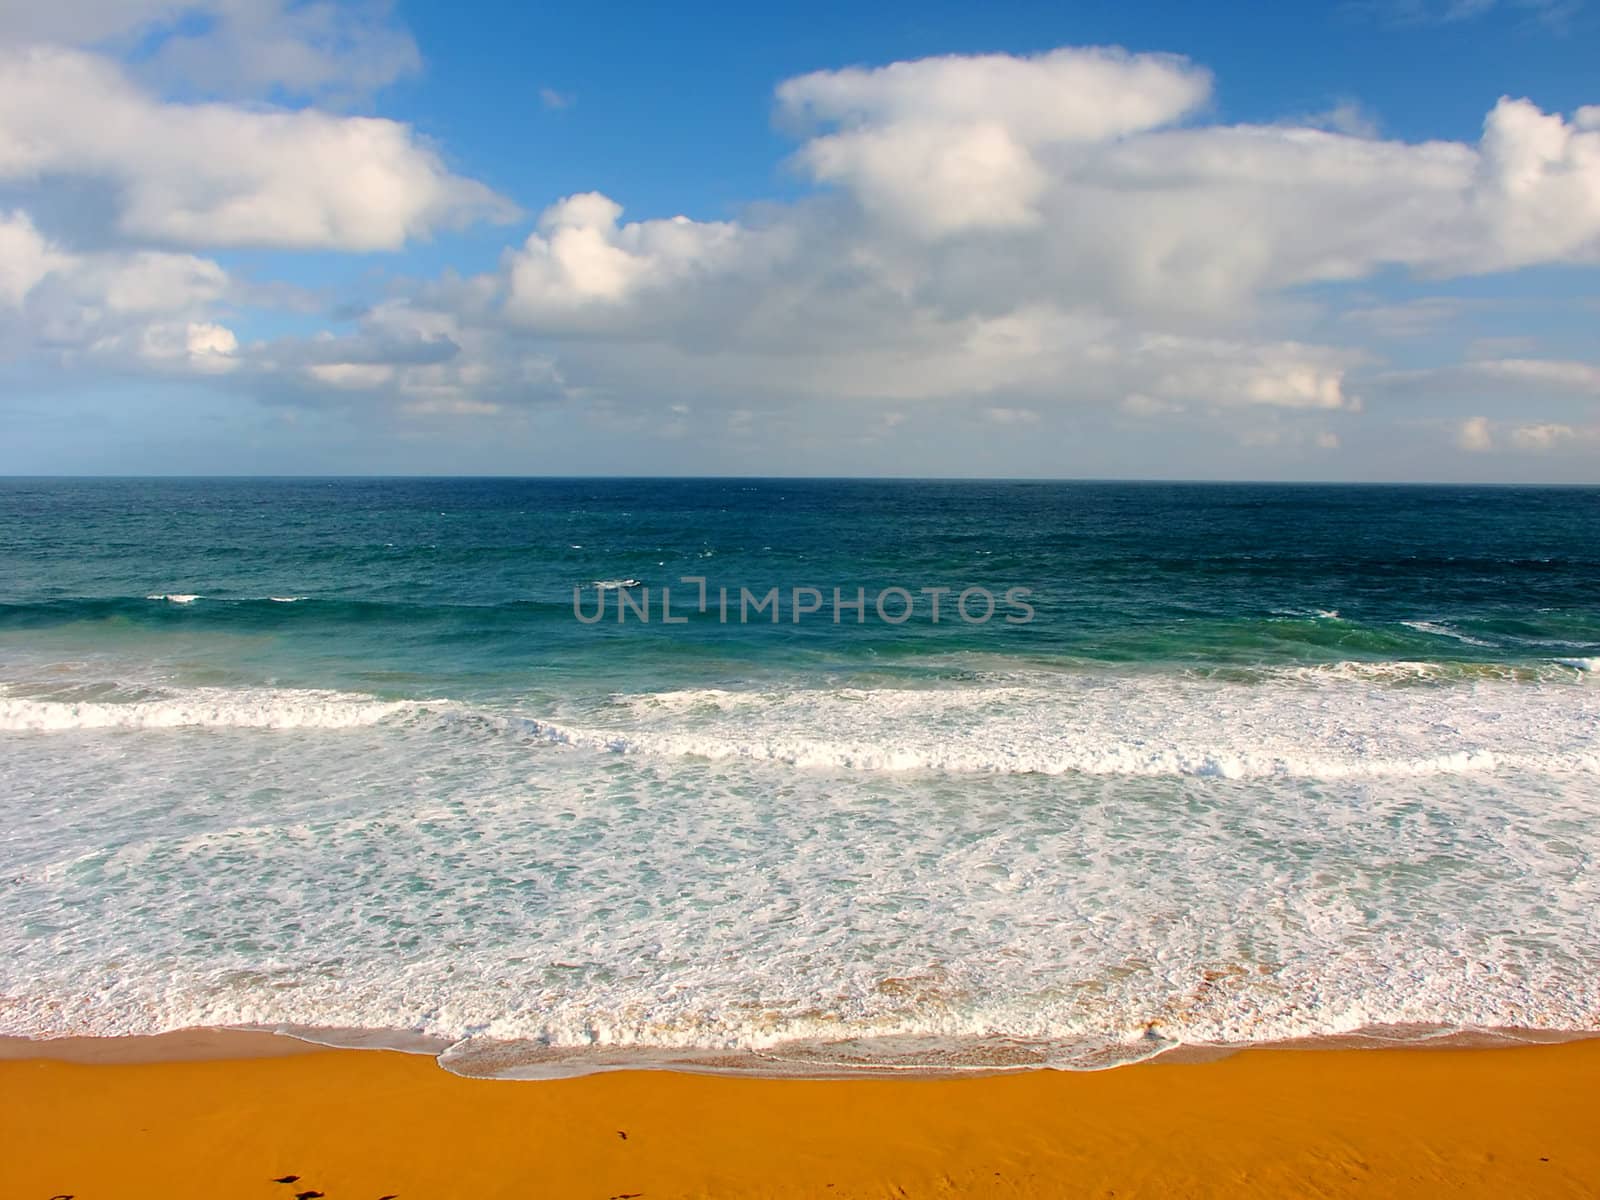 Logans beach along the coastline of southern Australia near Warrnambool, Victoria.